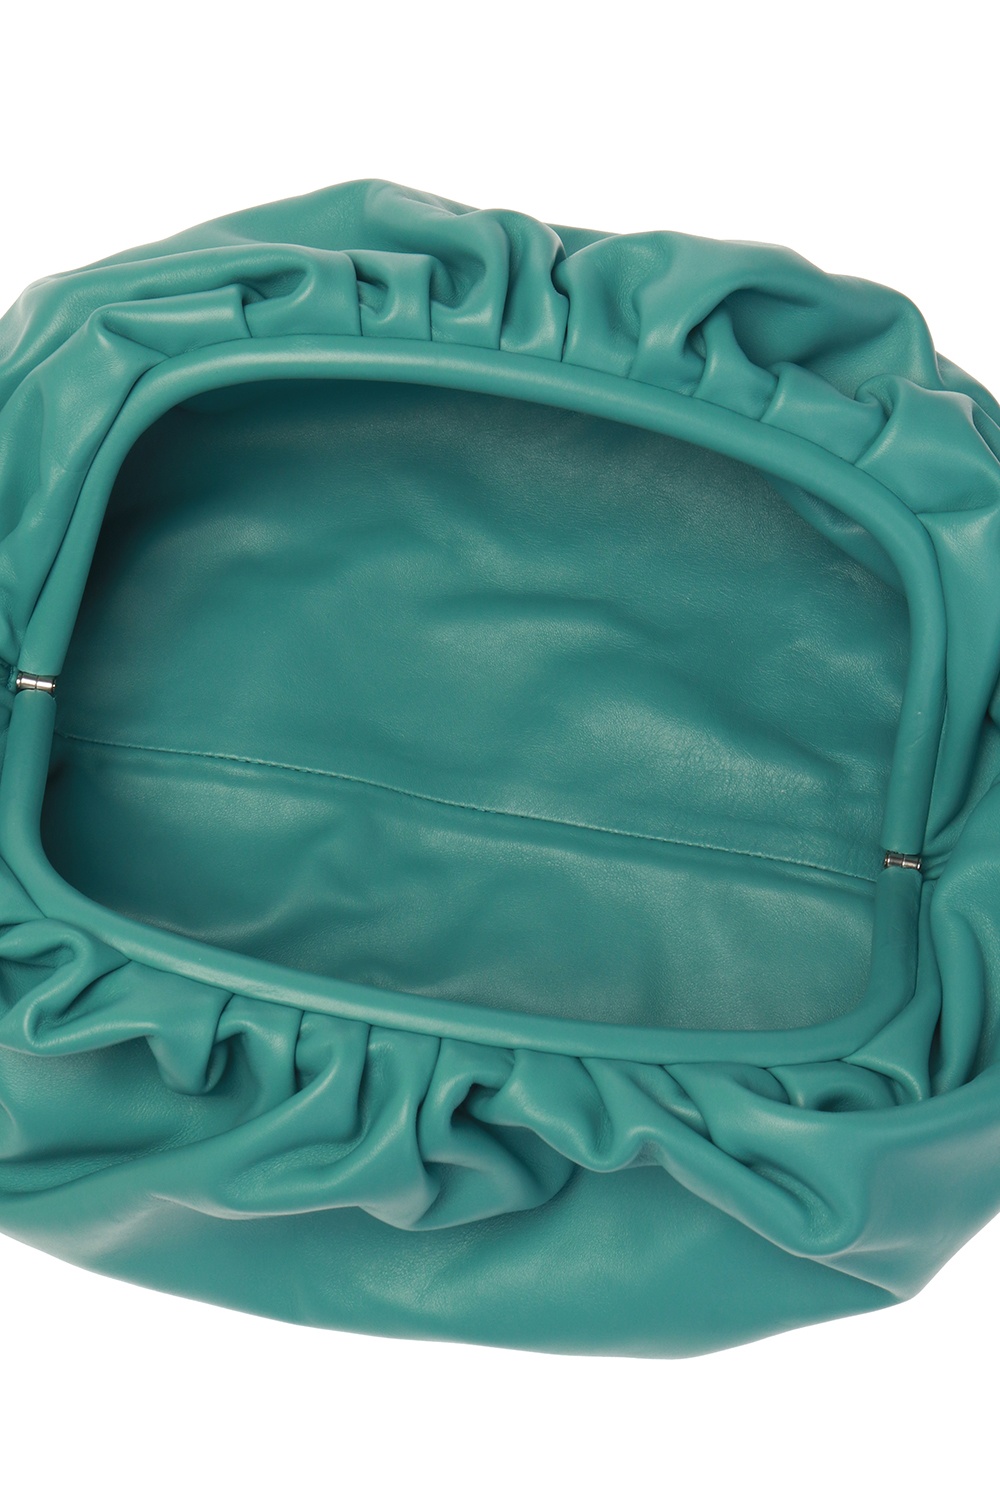 Bottega Veneta ‘bottega veneta padded marie shoulder bag item